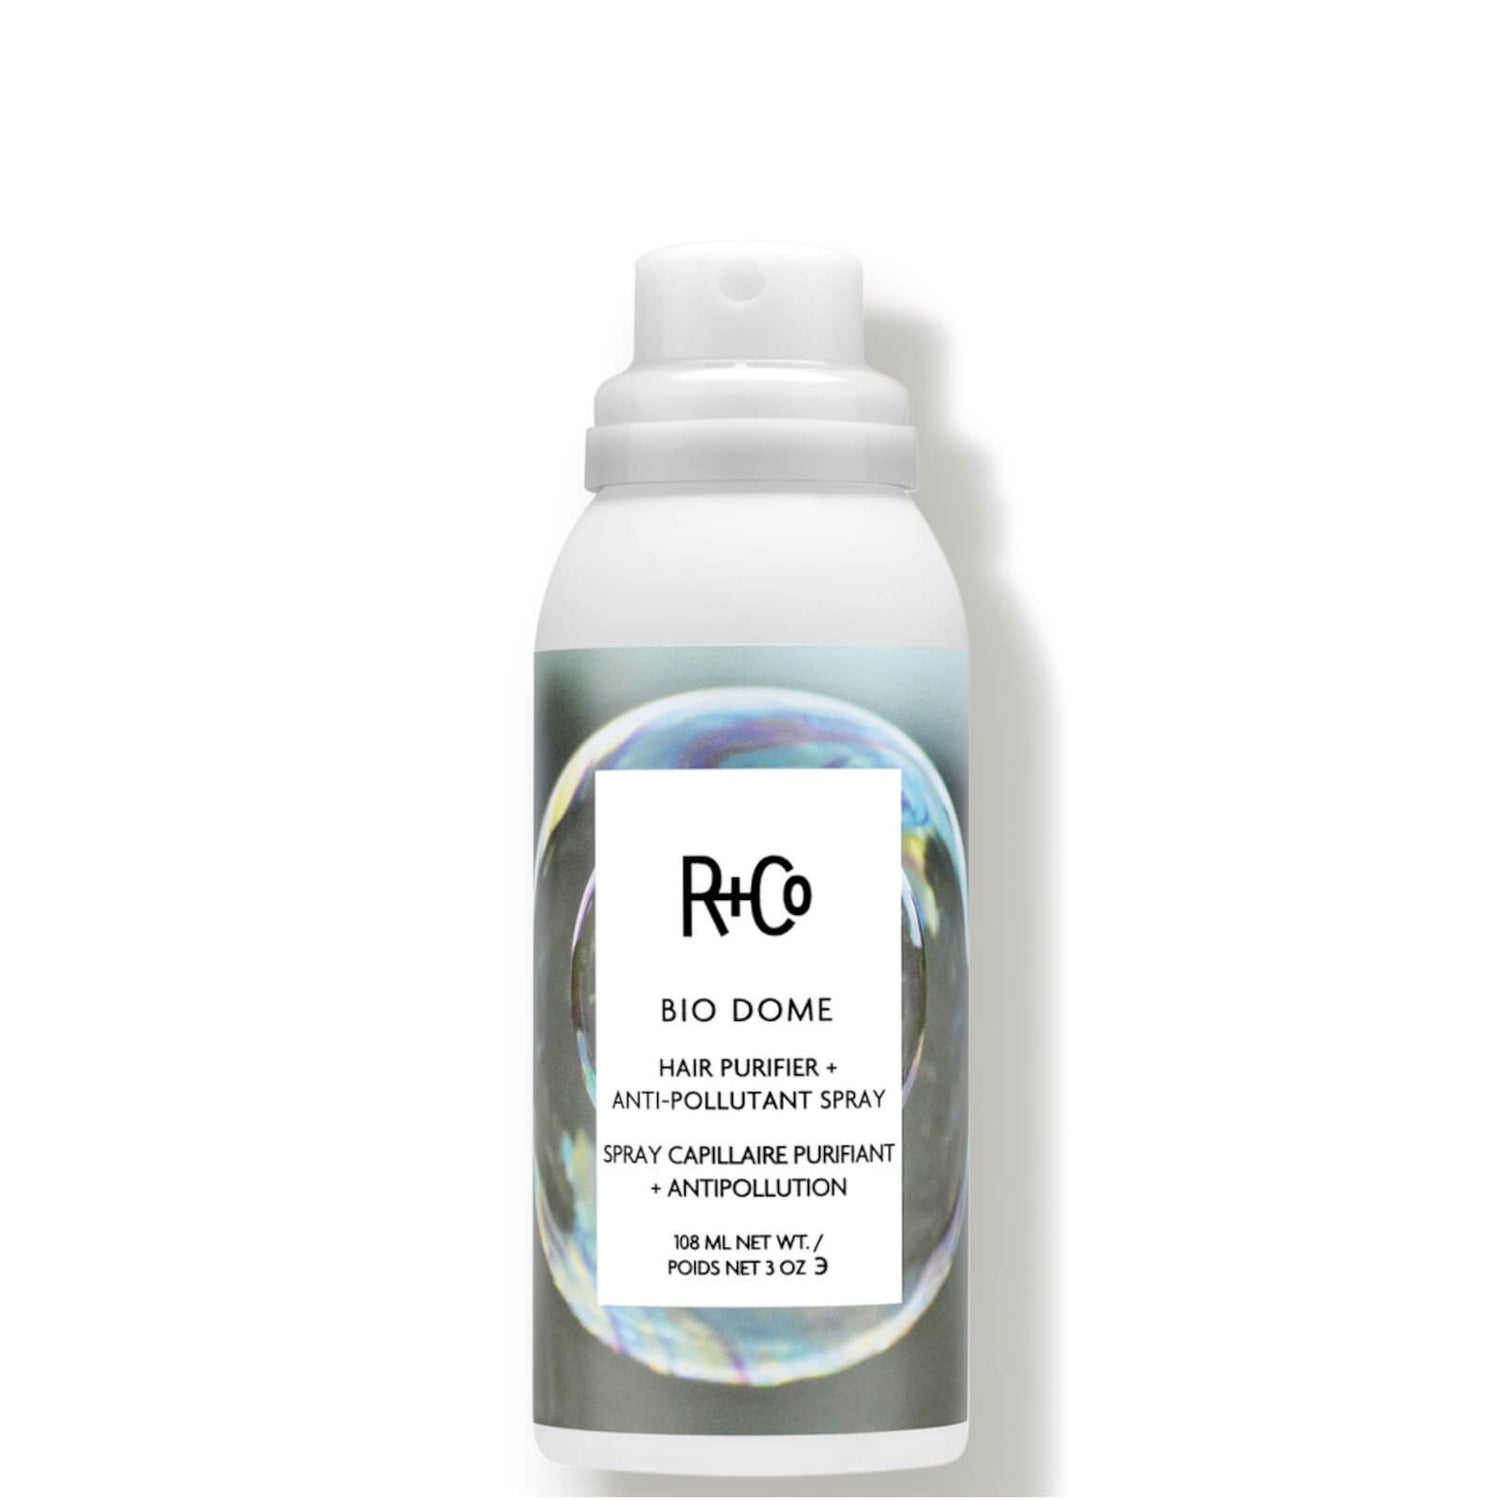 R+Co BIO DOME Hair Purifier Anti-Pollutant Spray 3 oz. | Cult Beauty